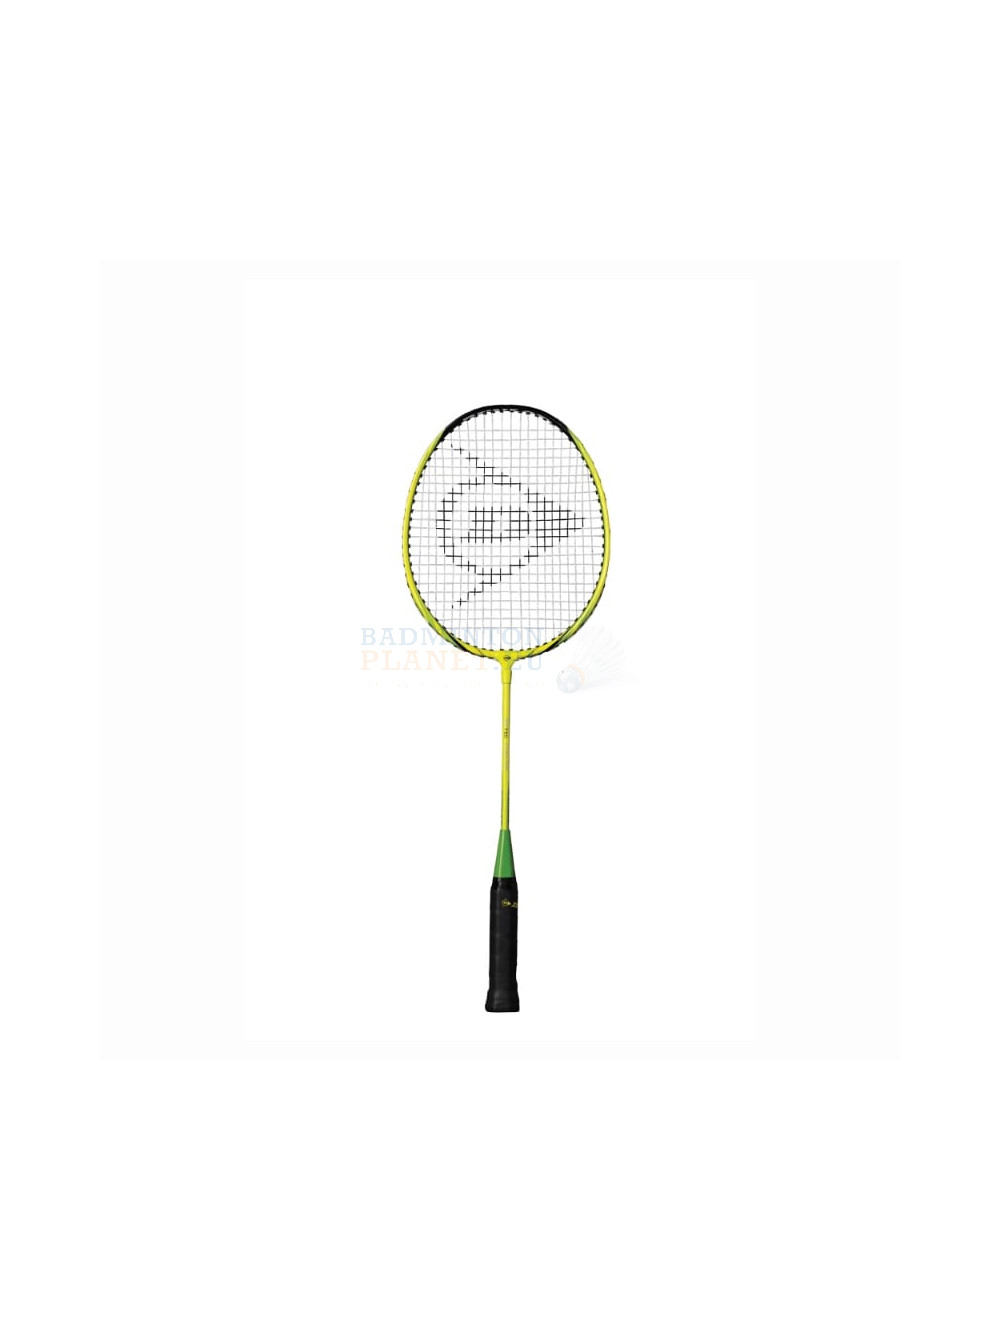 Dunlop Junior Pro badminton racket? - Badmintonplanet.eu